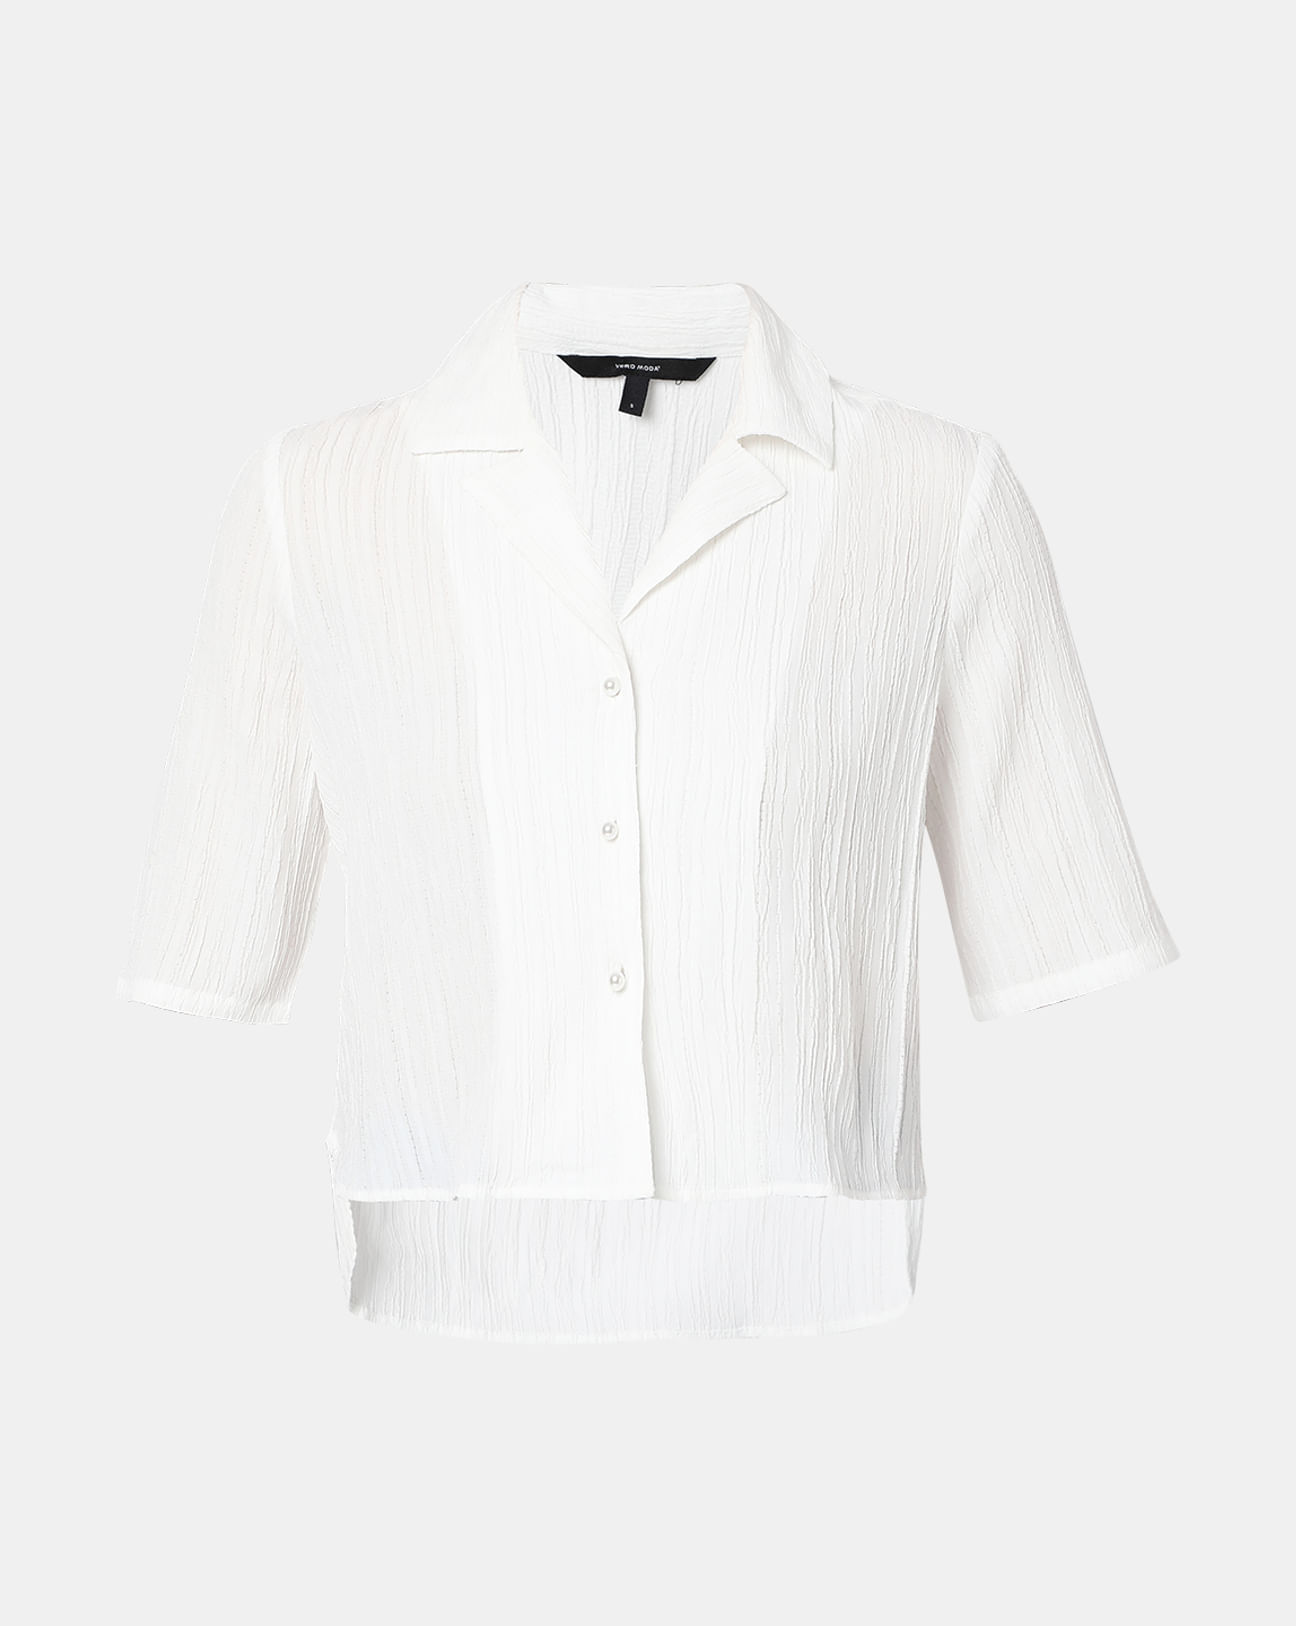 Women Online Textured | Buy in For VeroModa India Shirt White Crop